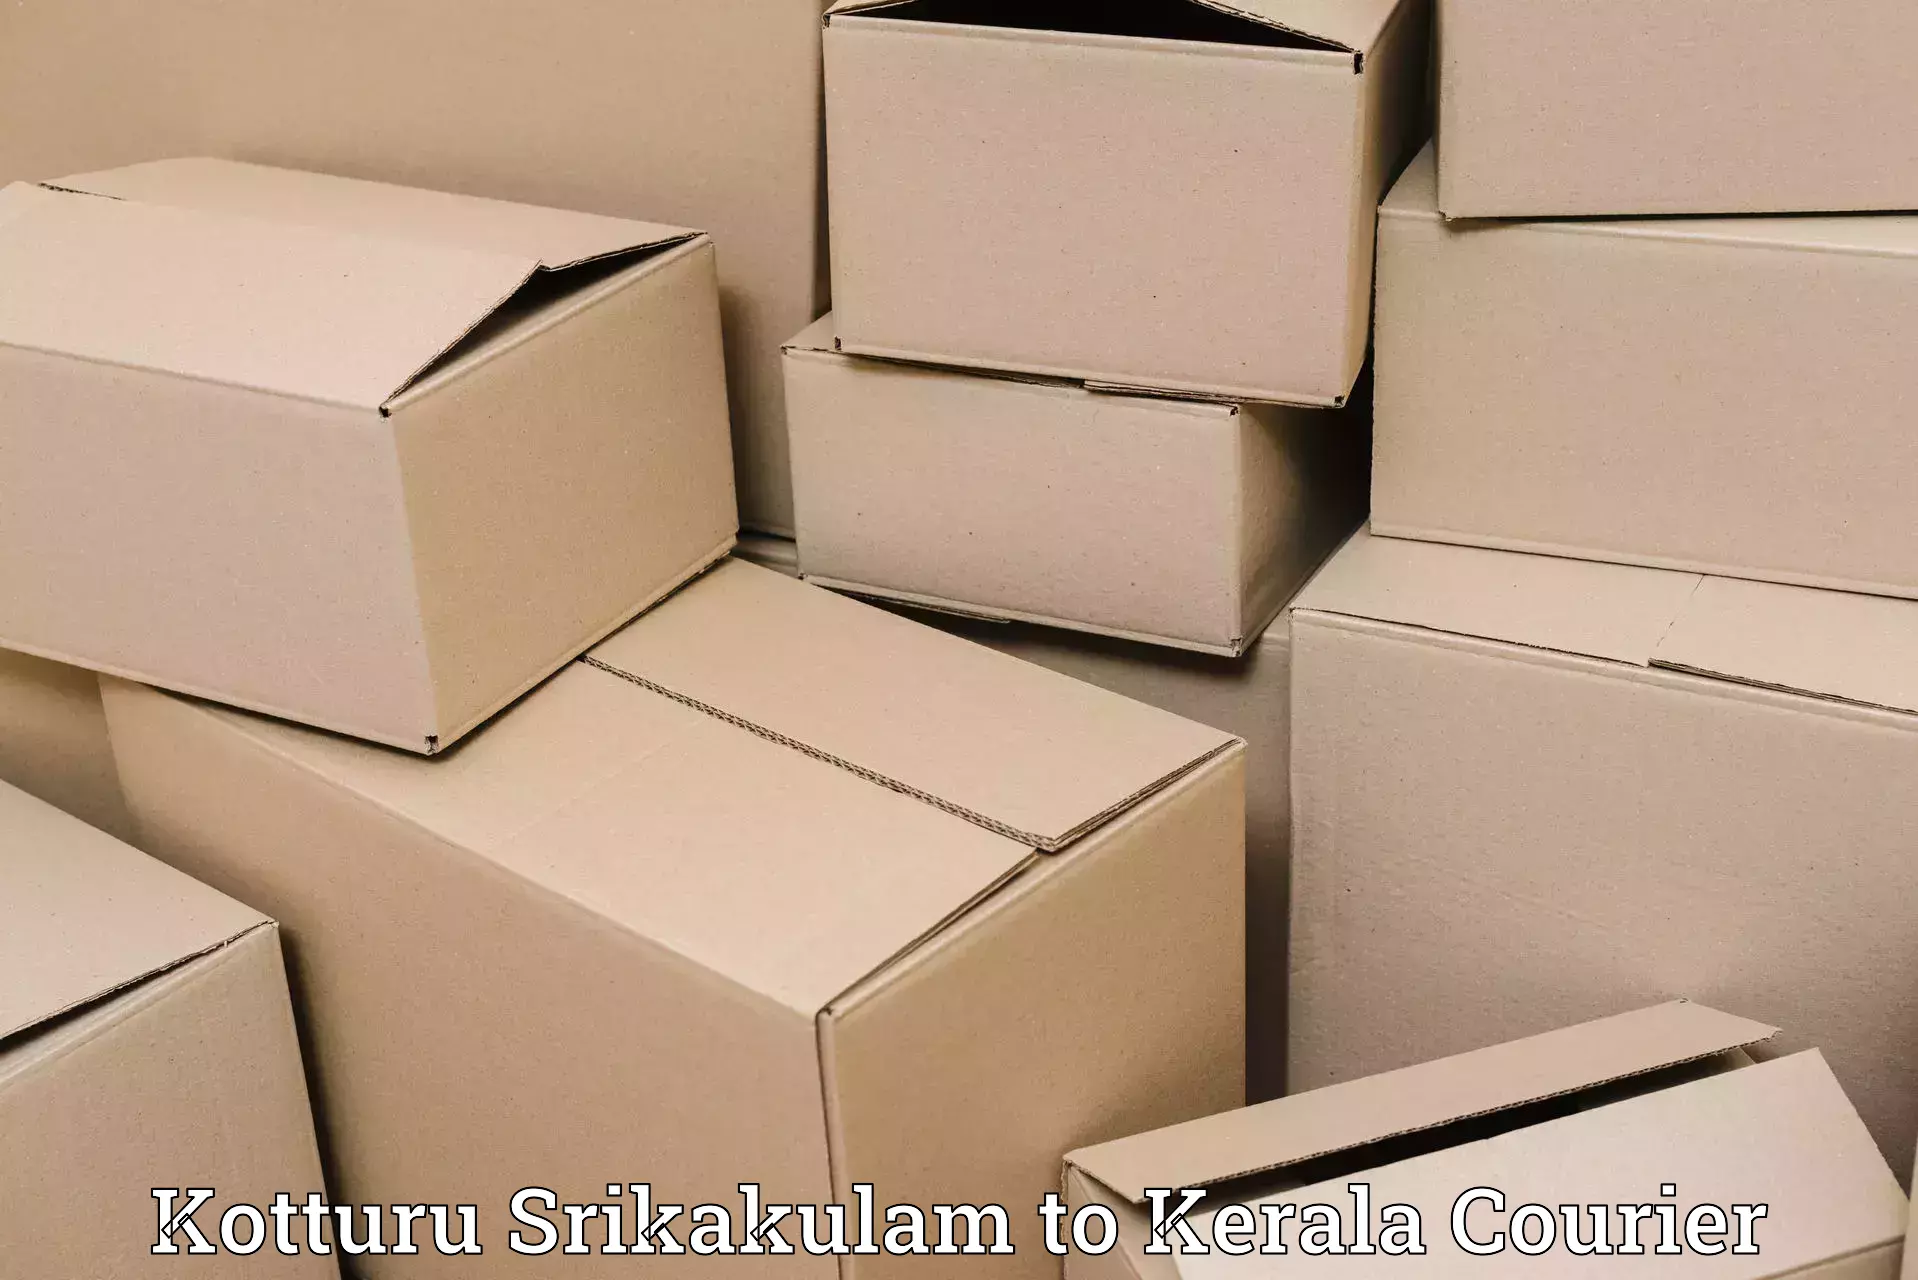 Weekend courier service Kotturu Srikakulam to Ponnani